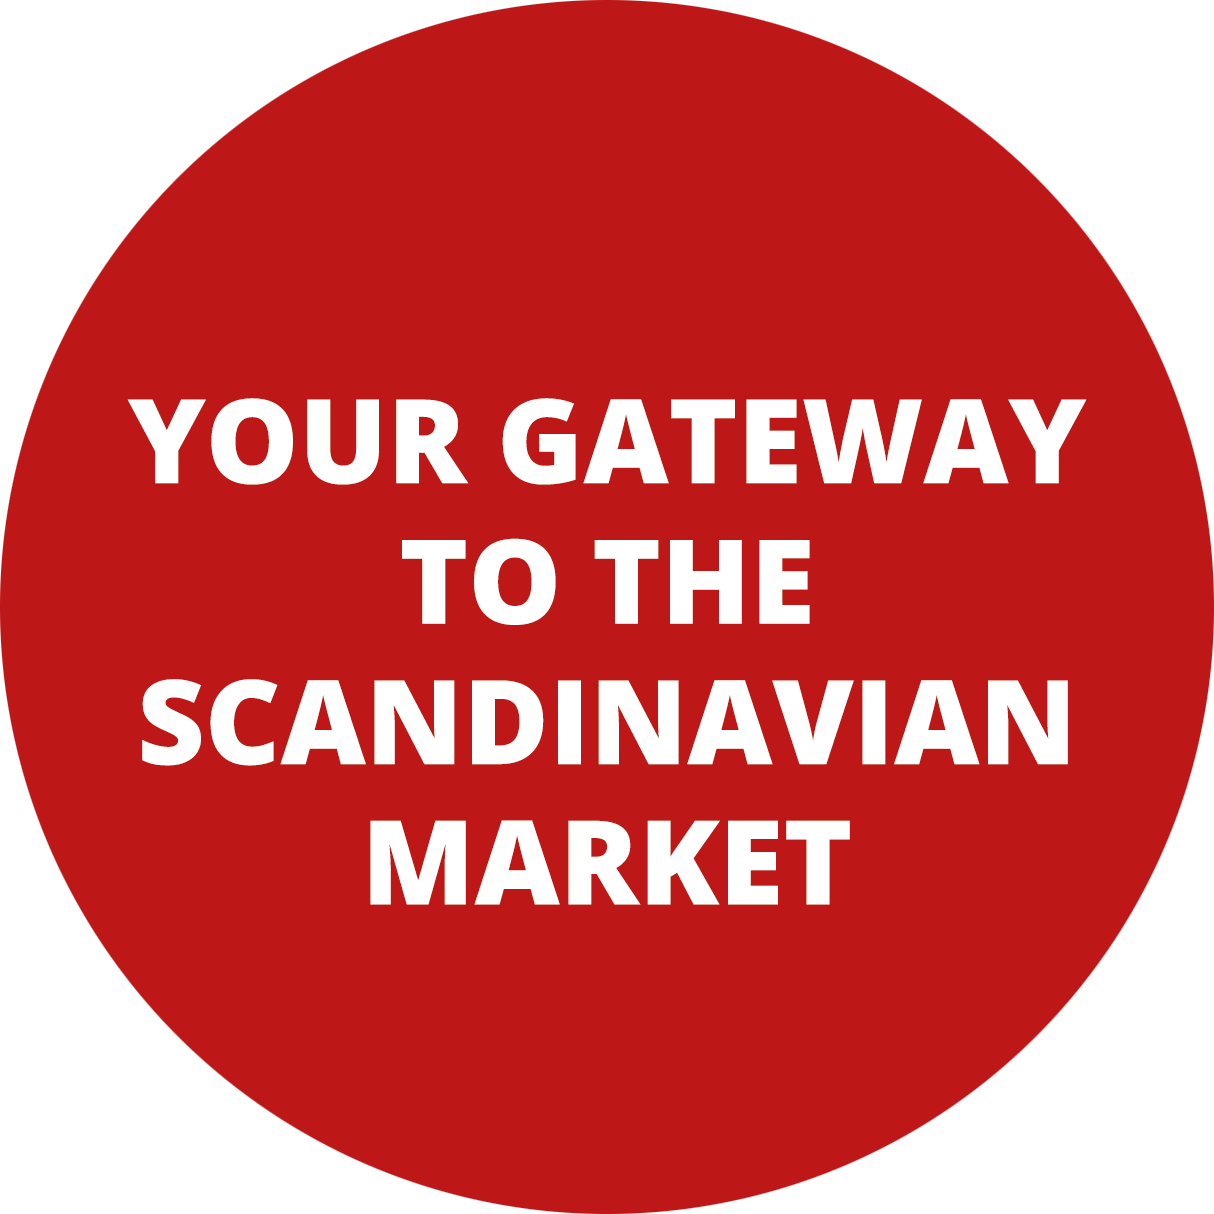 Your gateway to the Scandinavian market